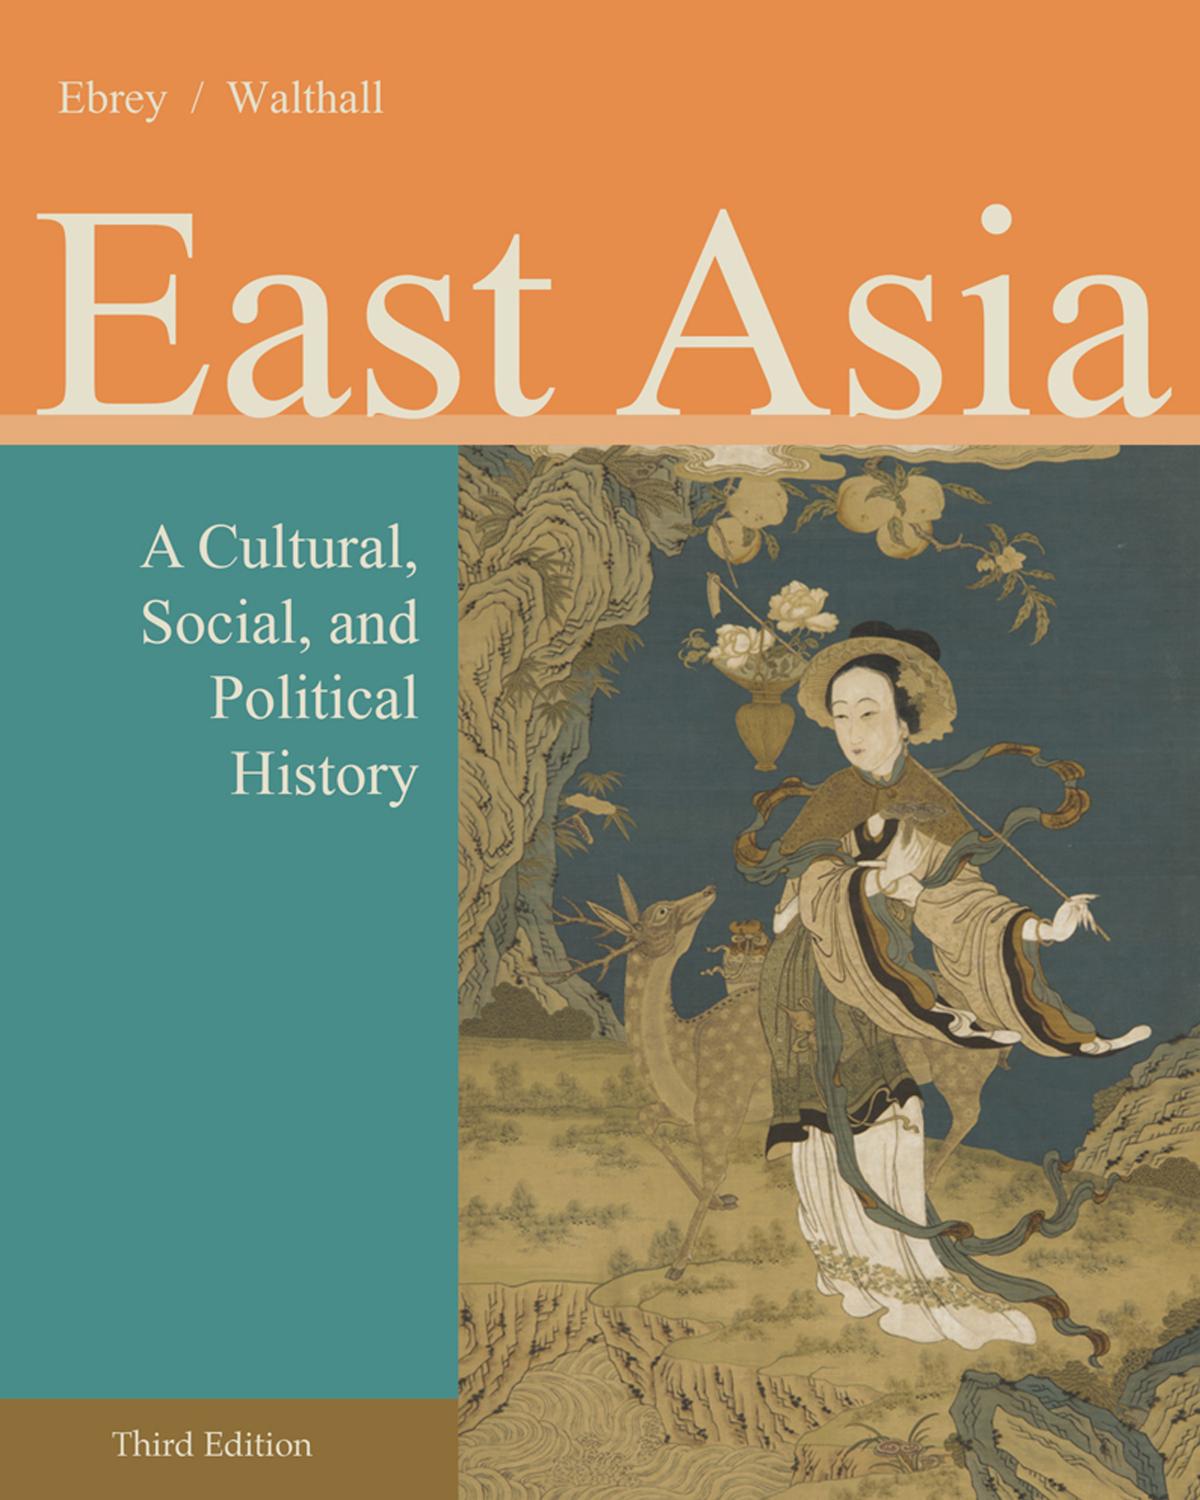 East Asia A Cultural, Social, and Political History 3rd Edition by Buckley Ebrey & Walthall - Wei Zhi.jpg